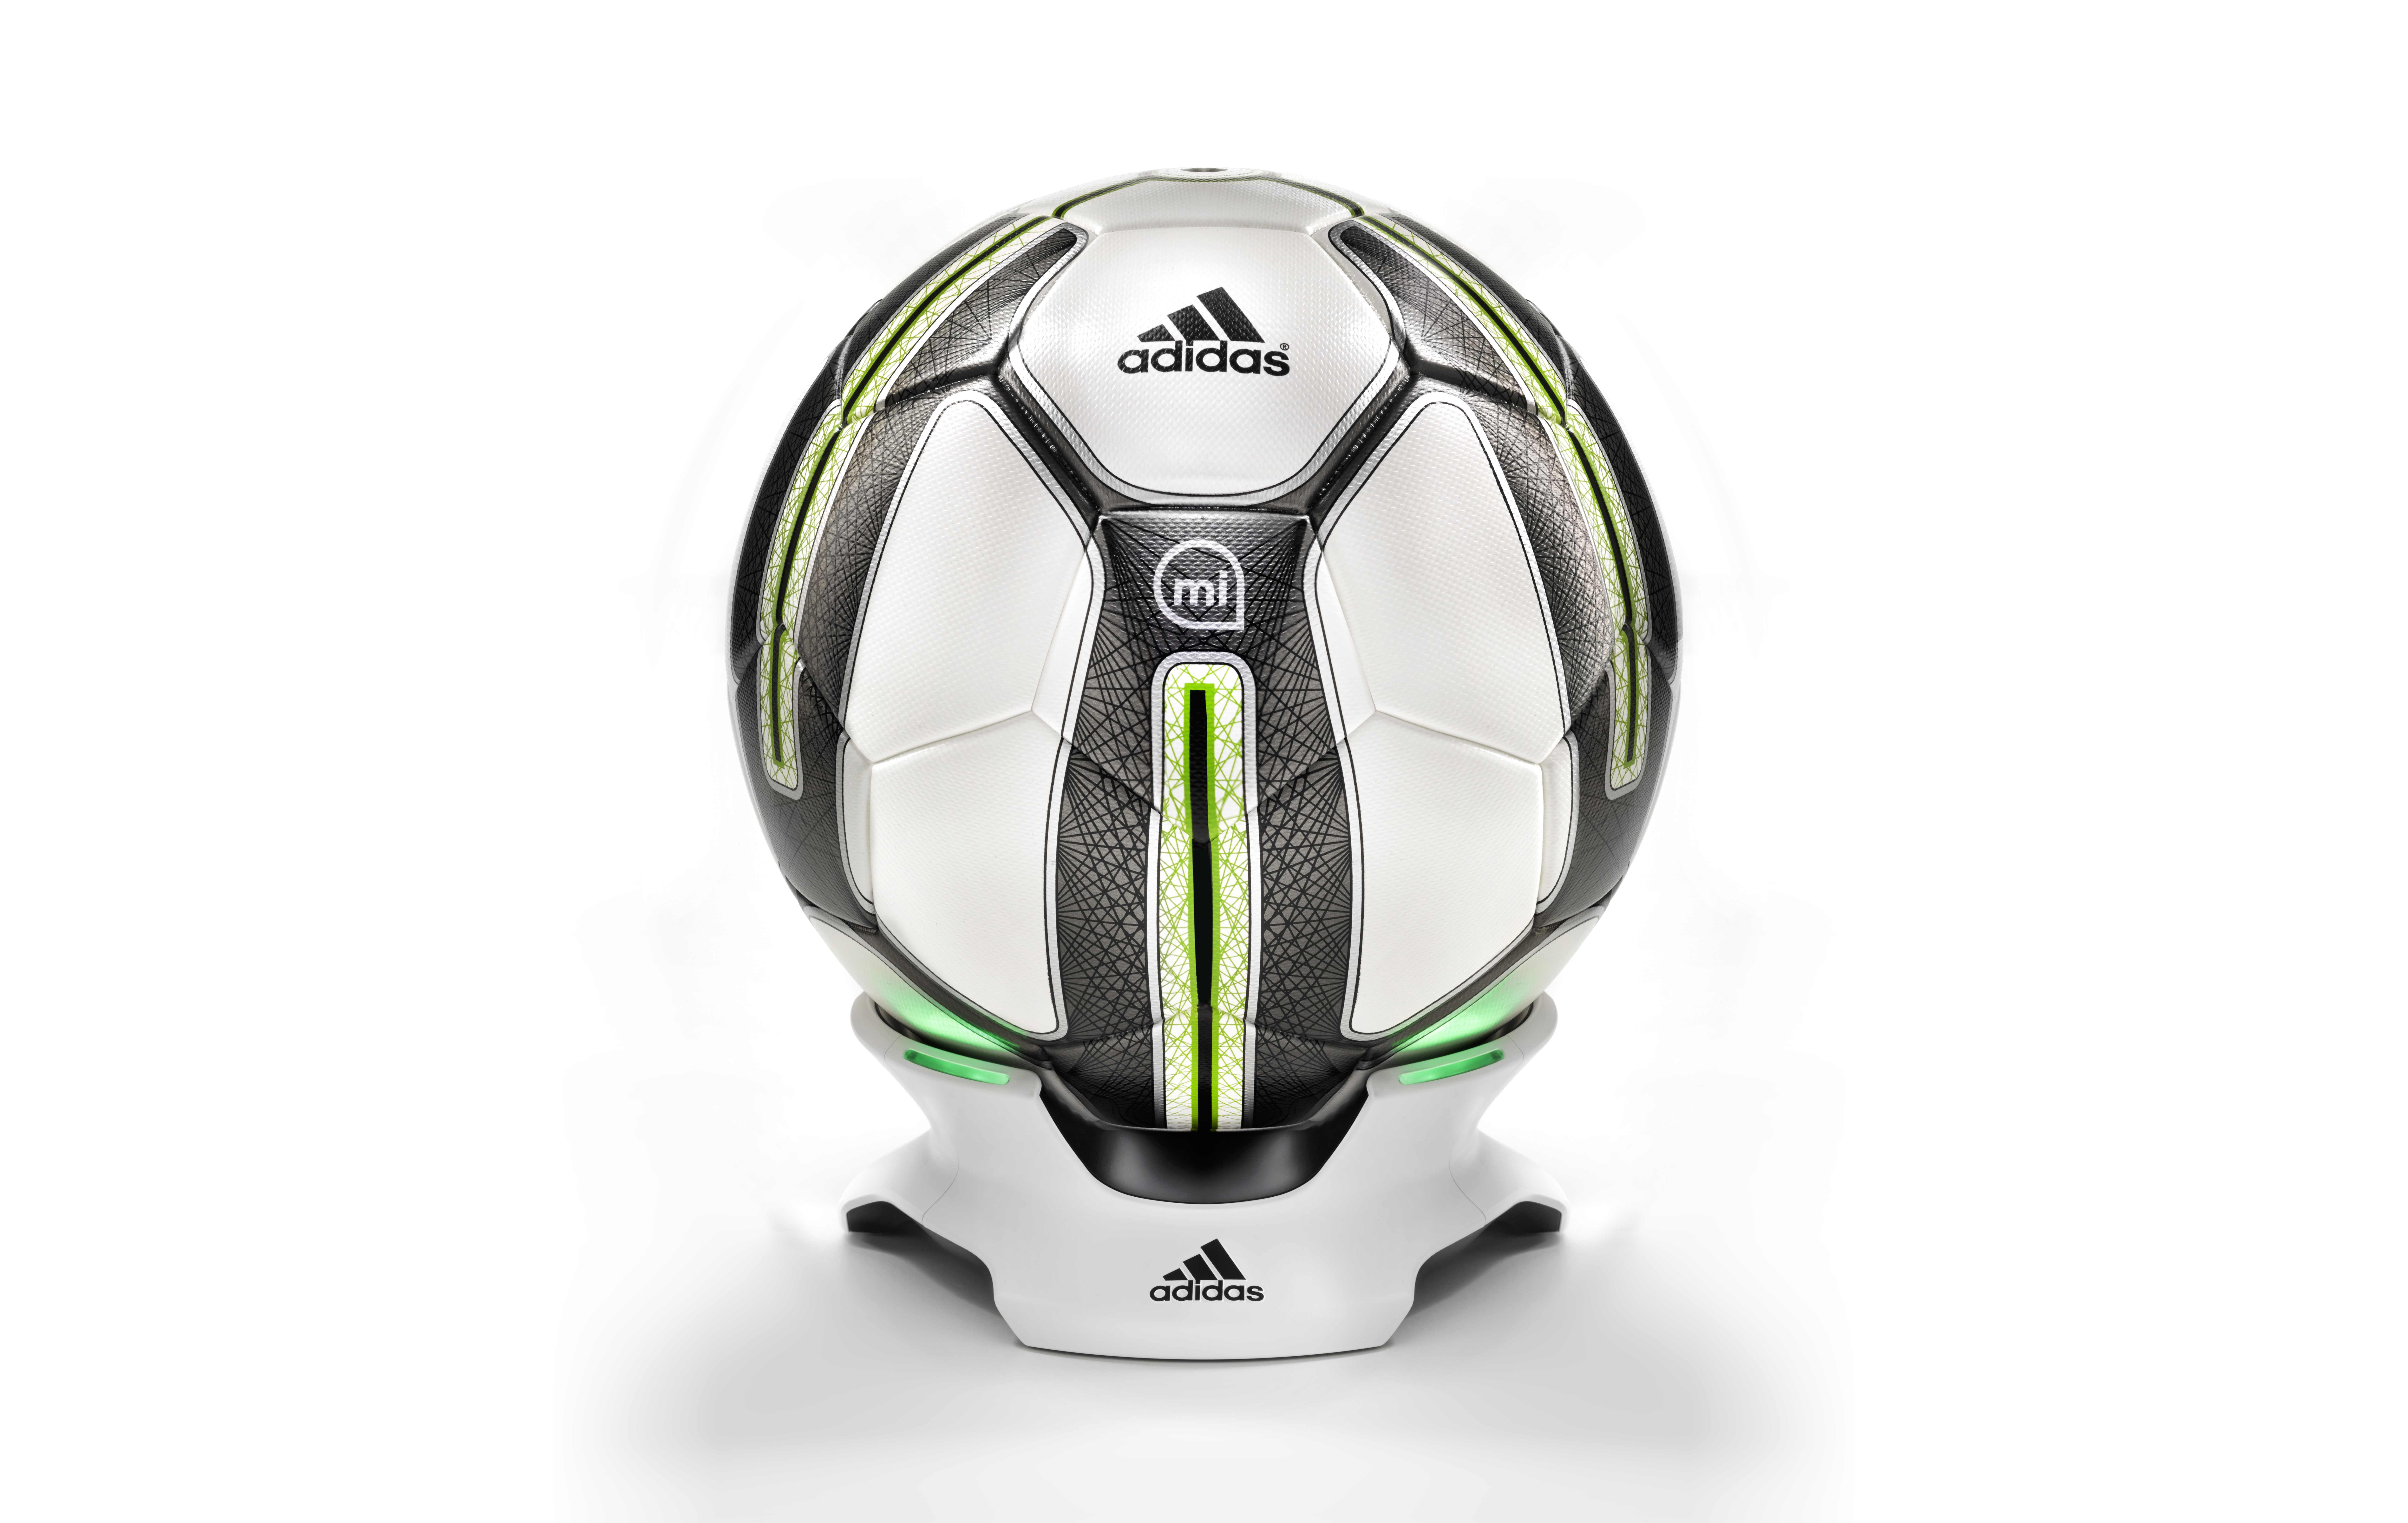 Adidas Creates Analytical Smart Ball